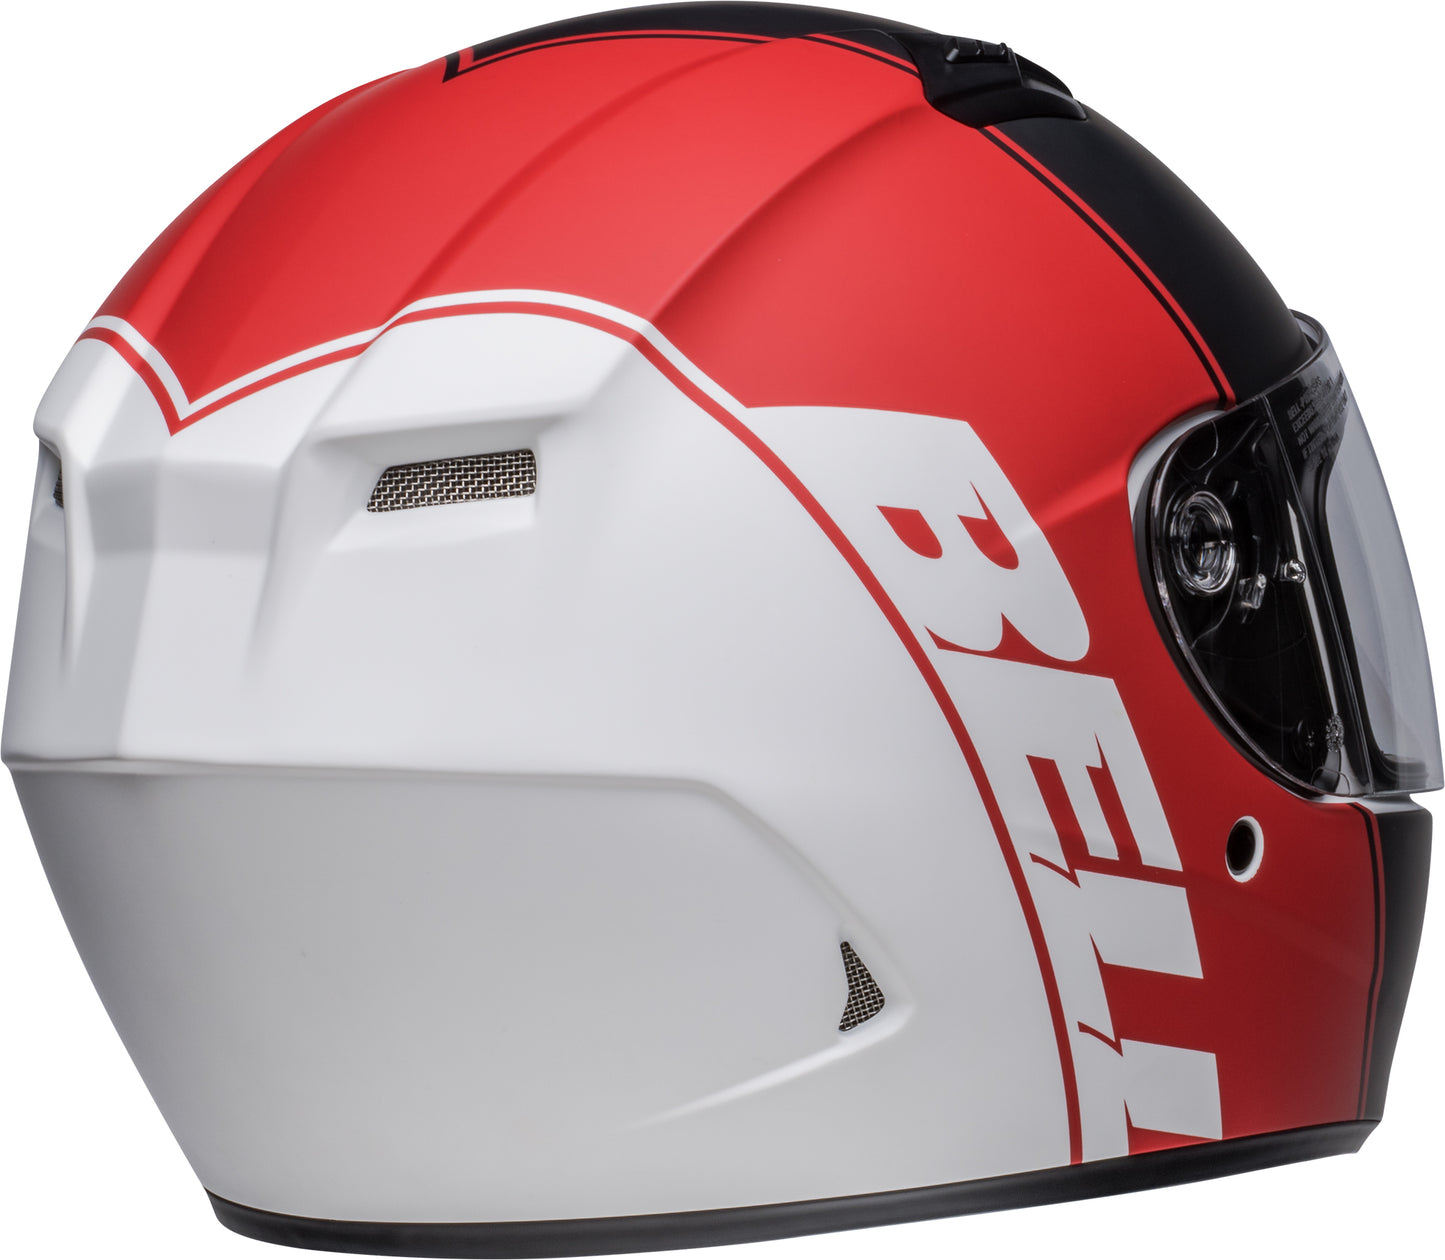 Bell Helmet Qualifier (Ascent Matte Black/Red)